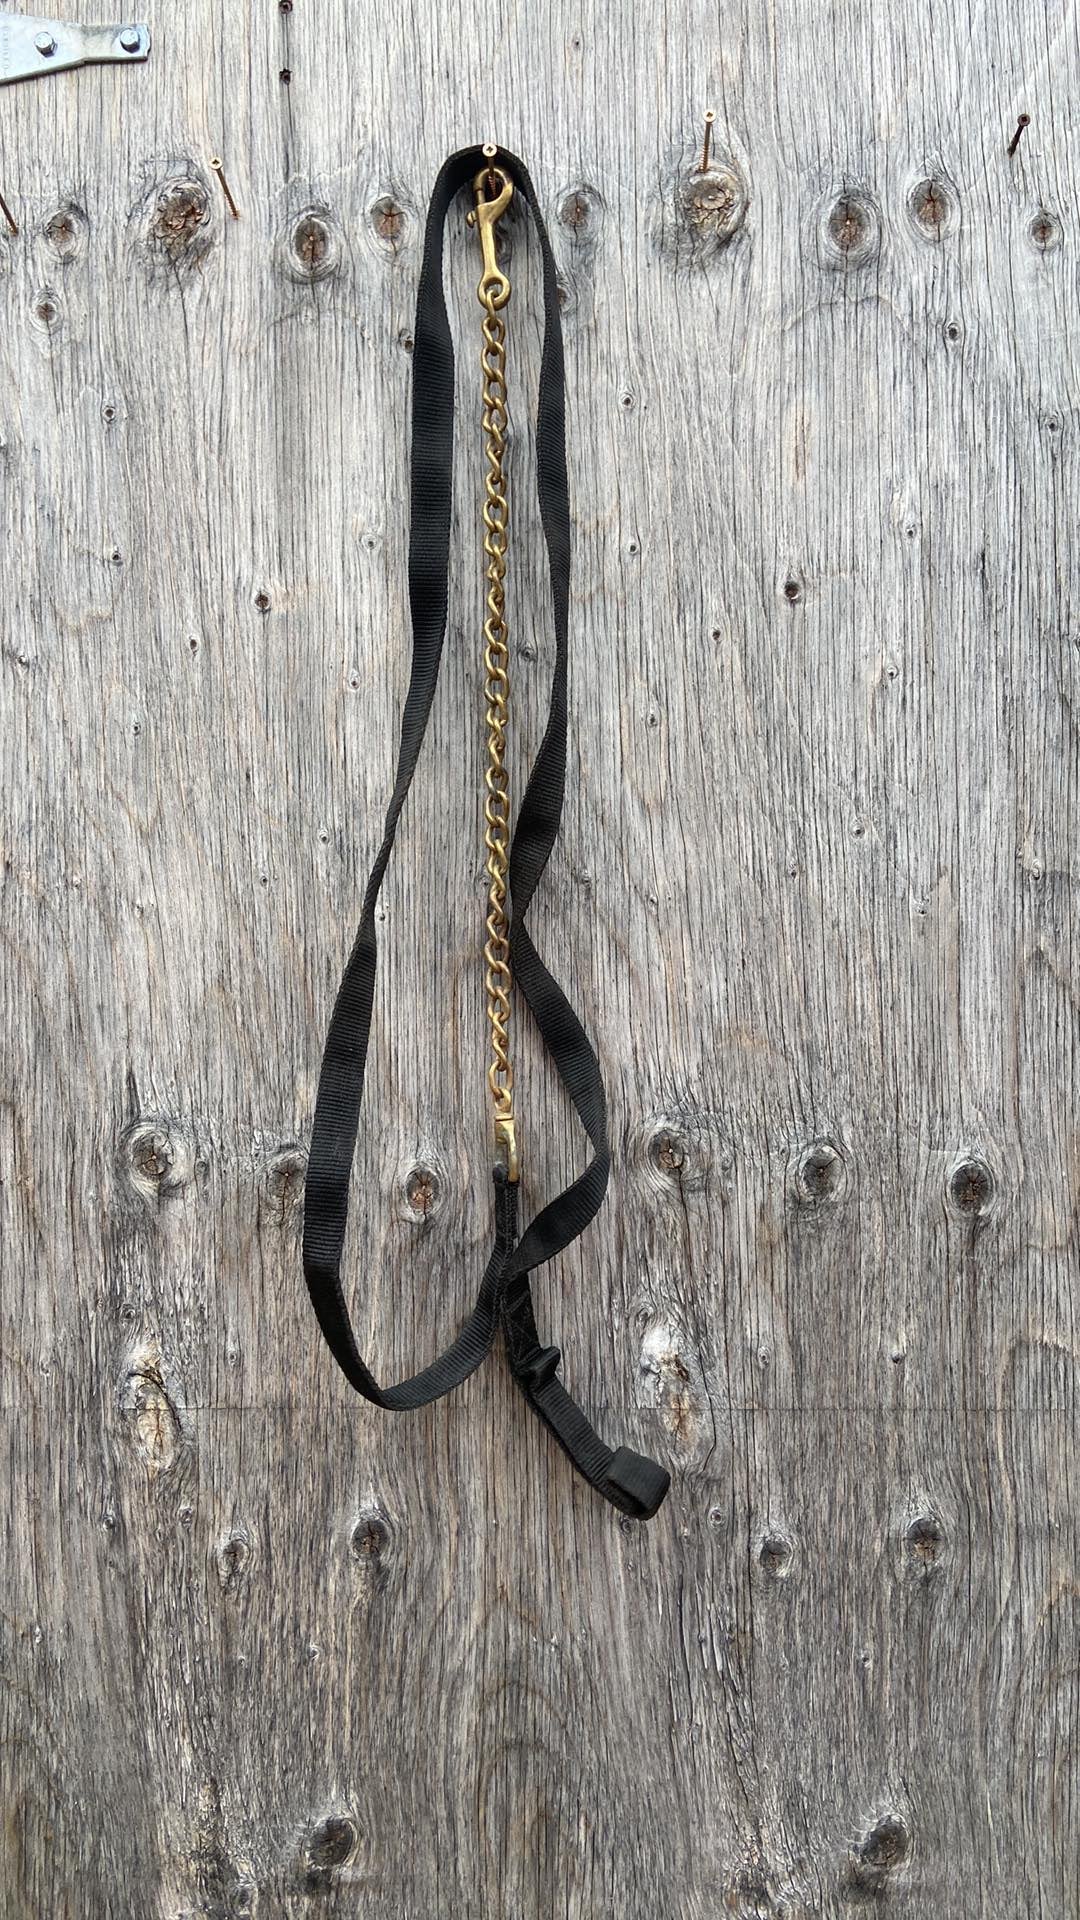 Black nylon lead with brass chain